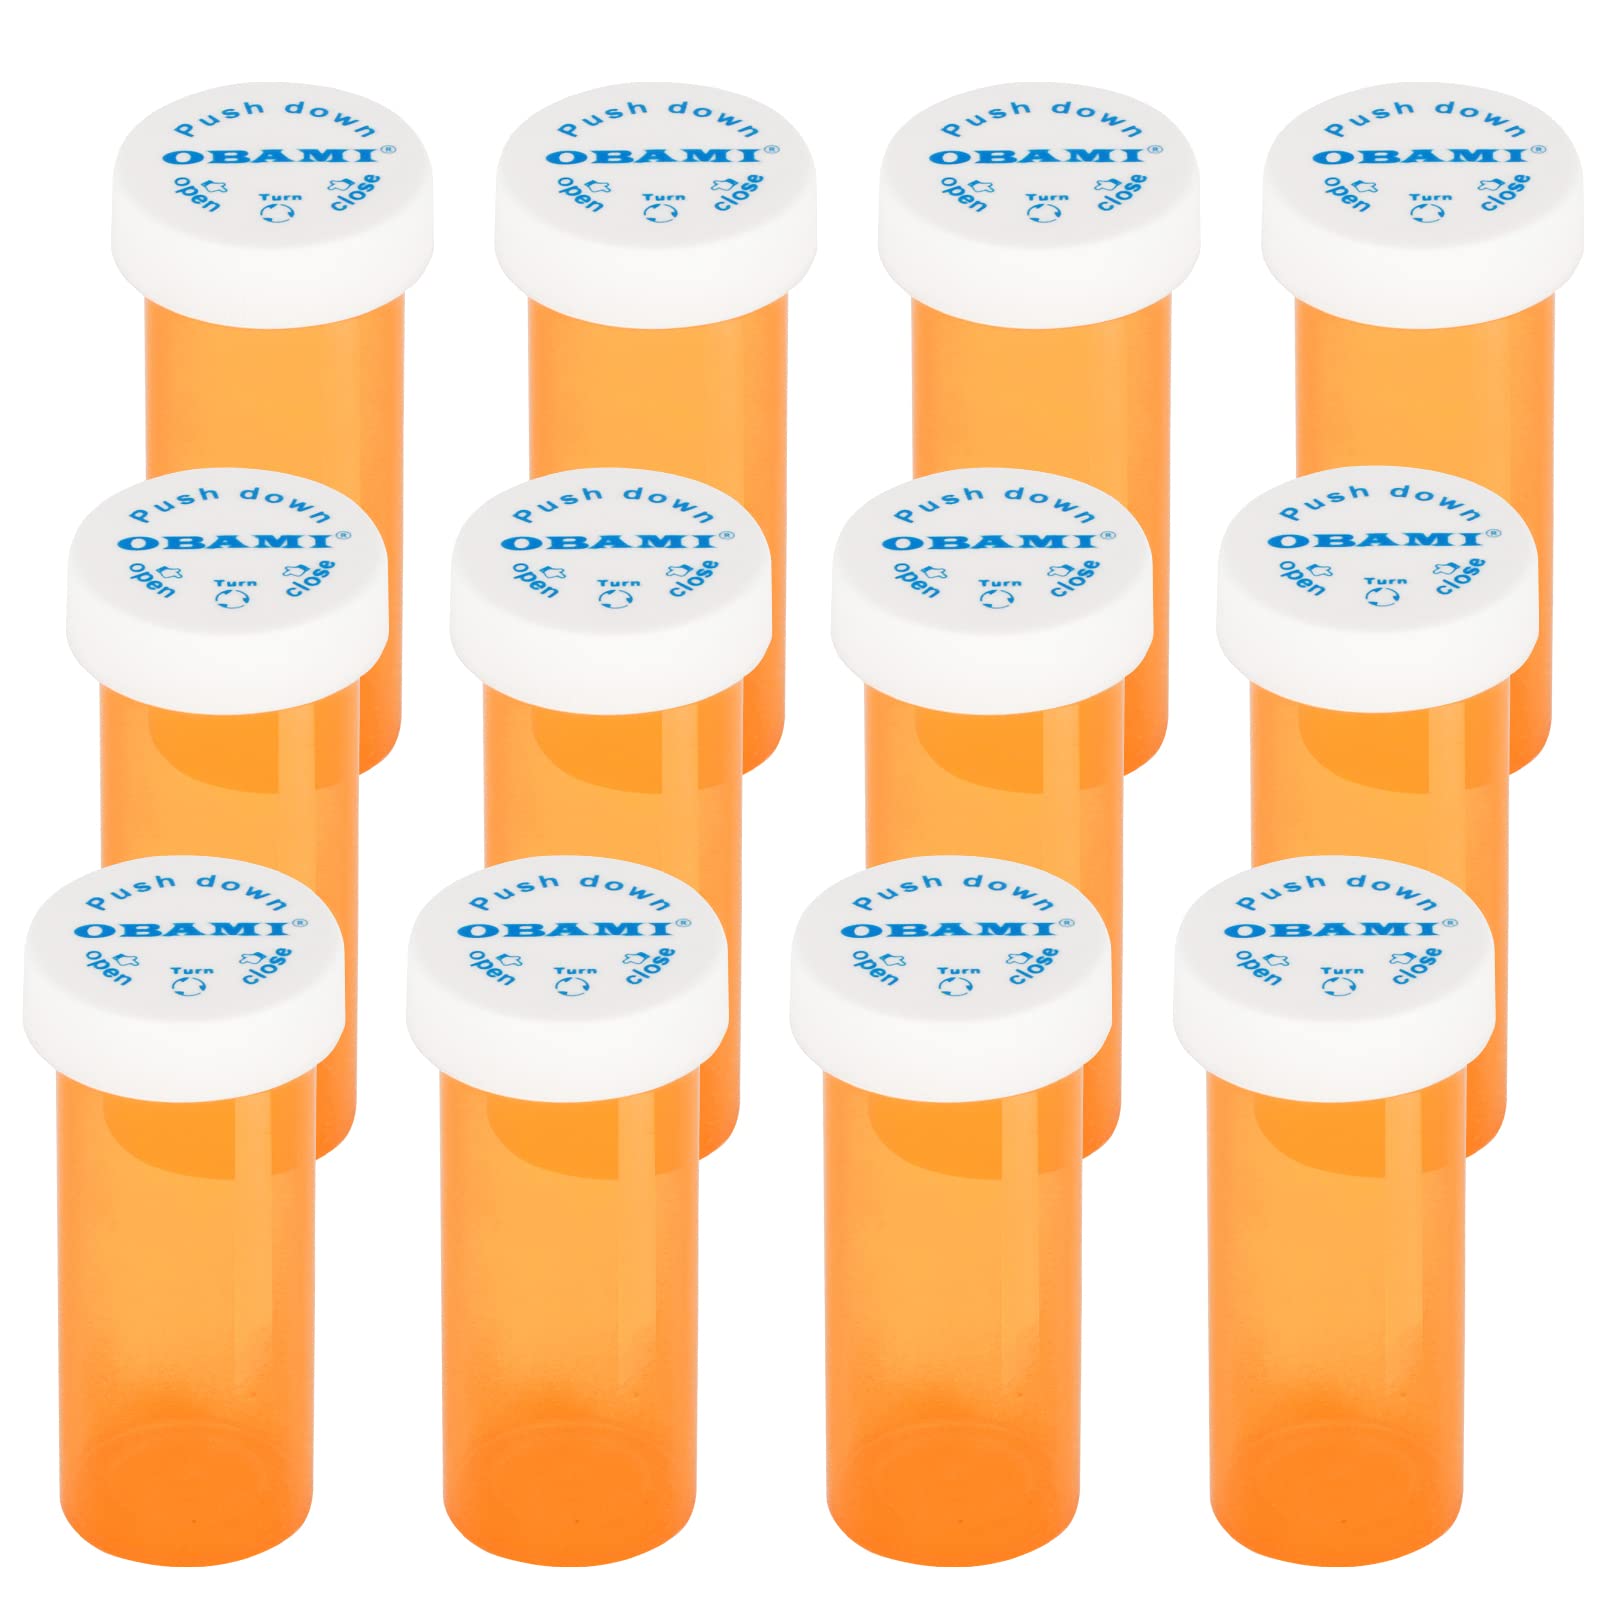 200 Pieces Medicine Pill Bottles With Child Resistant Caps Empty